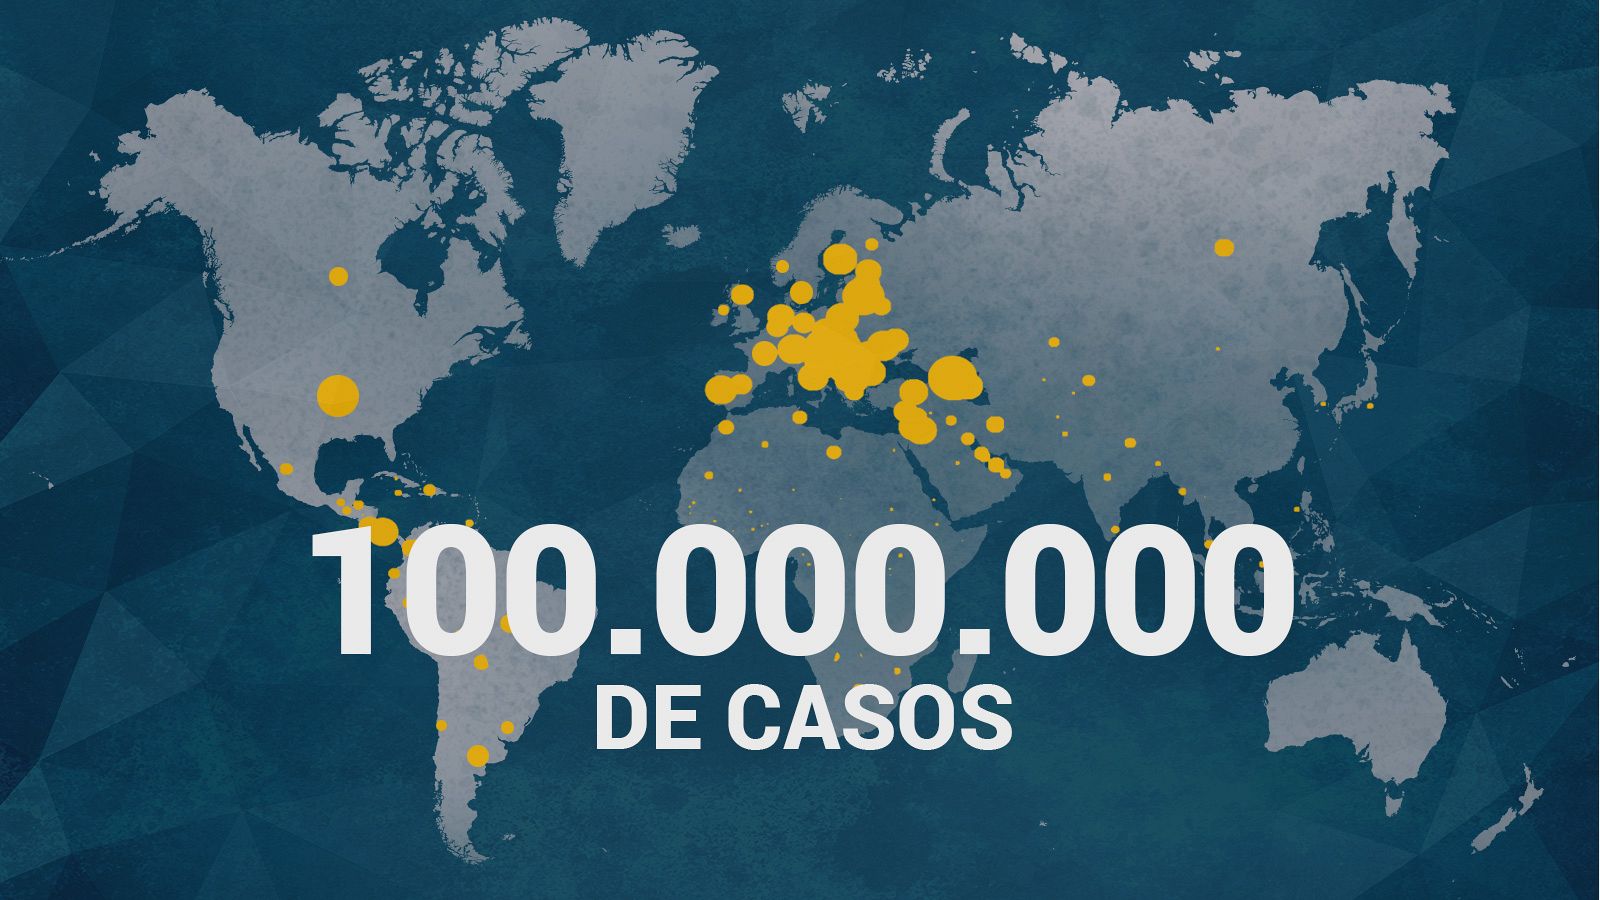 La cifra global de muertes por coronavirus llega a 200.000